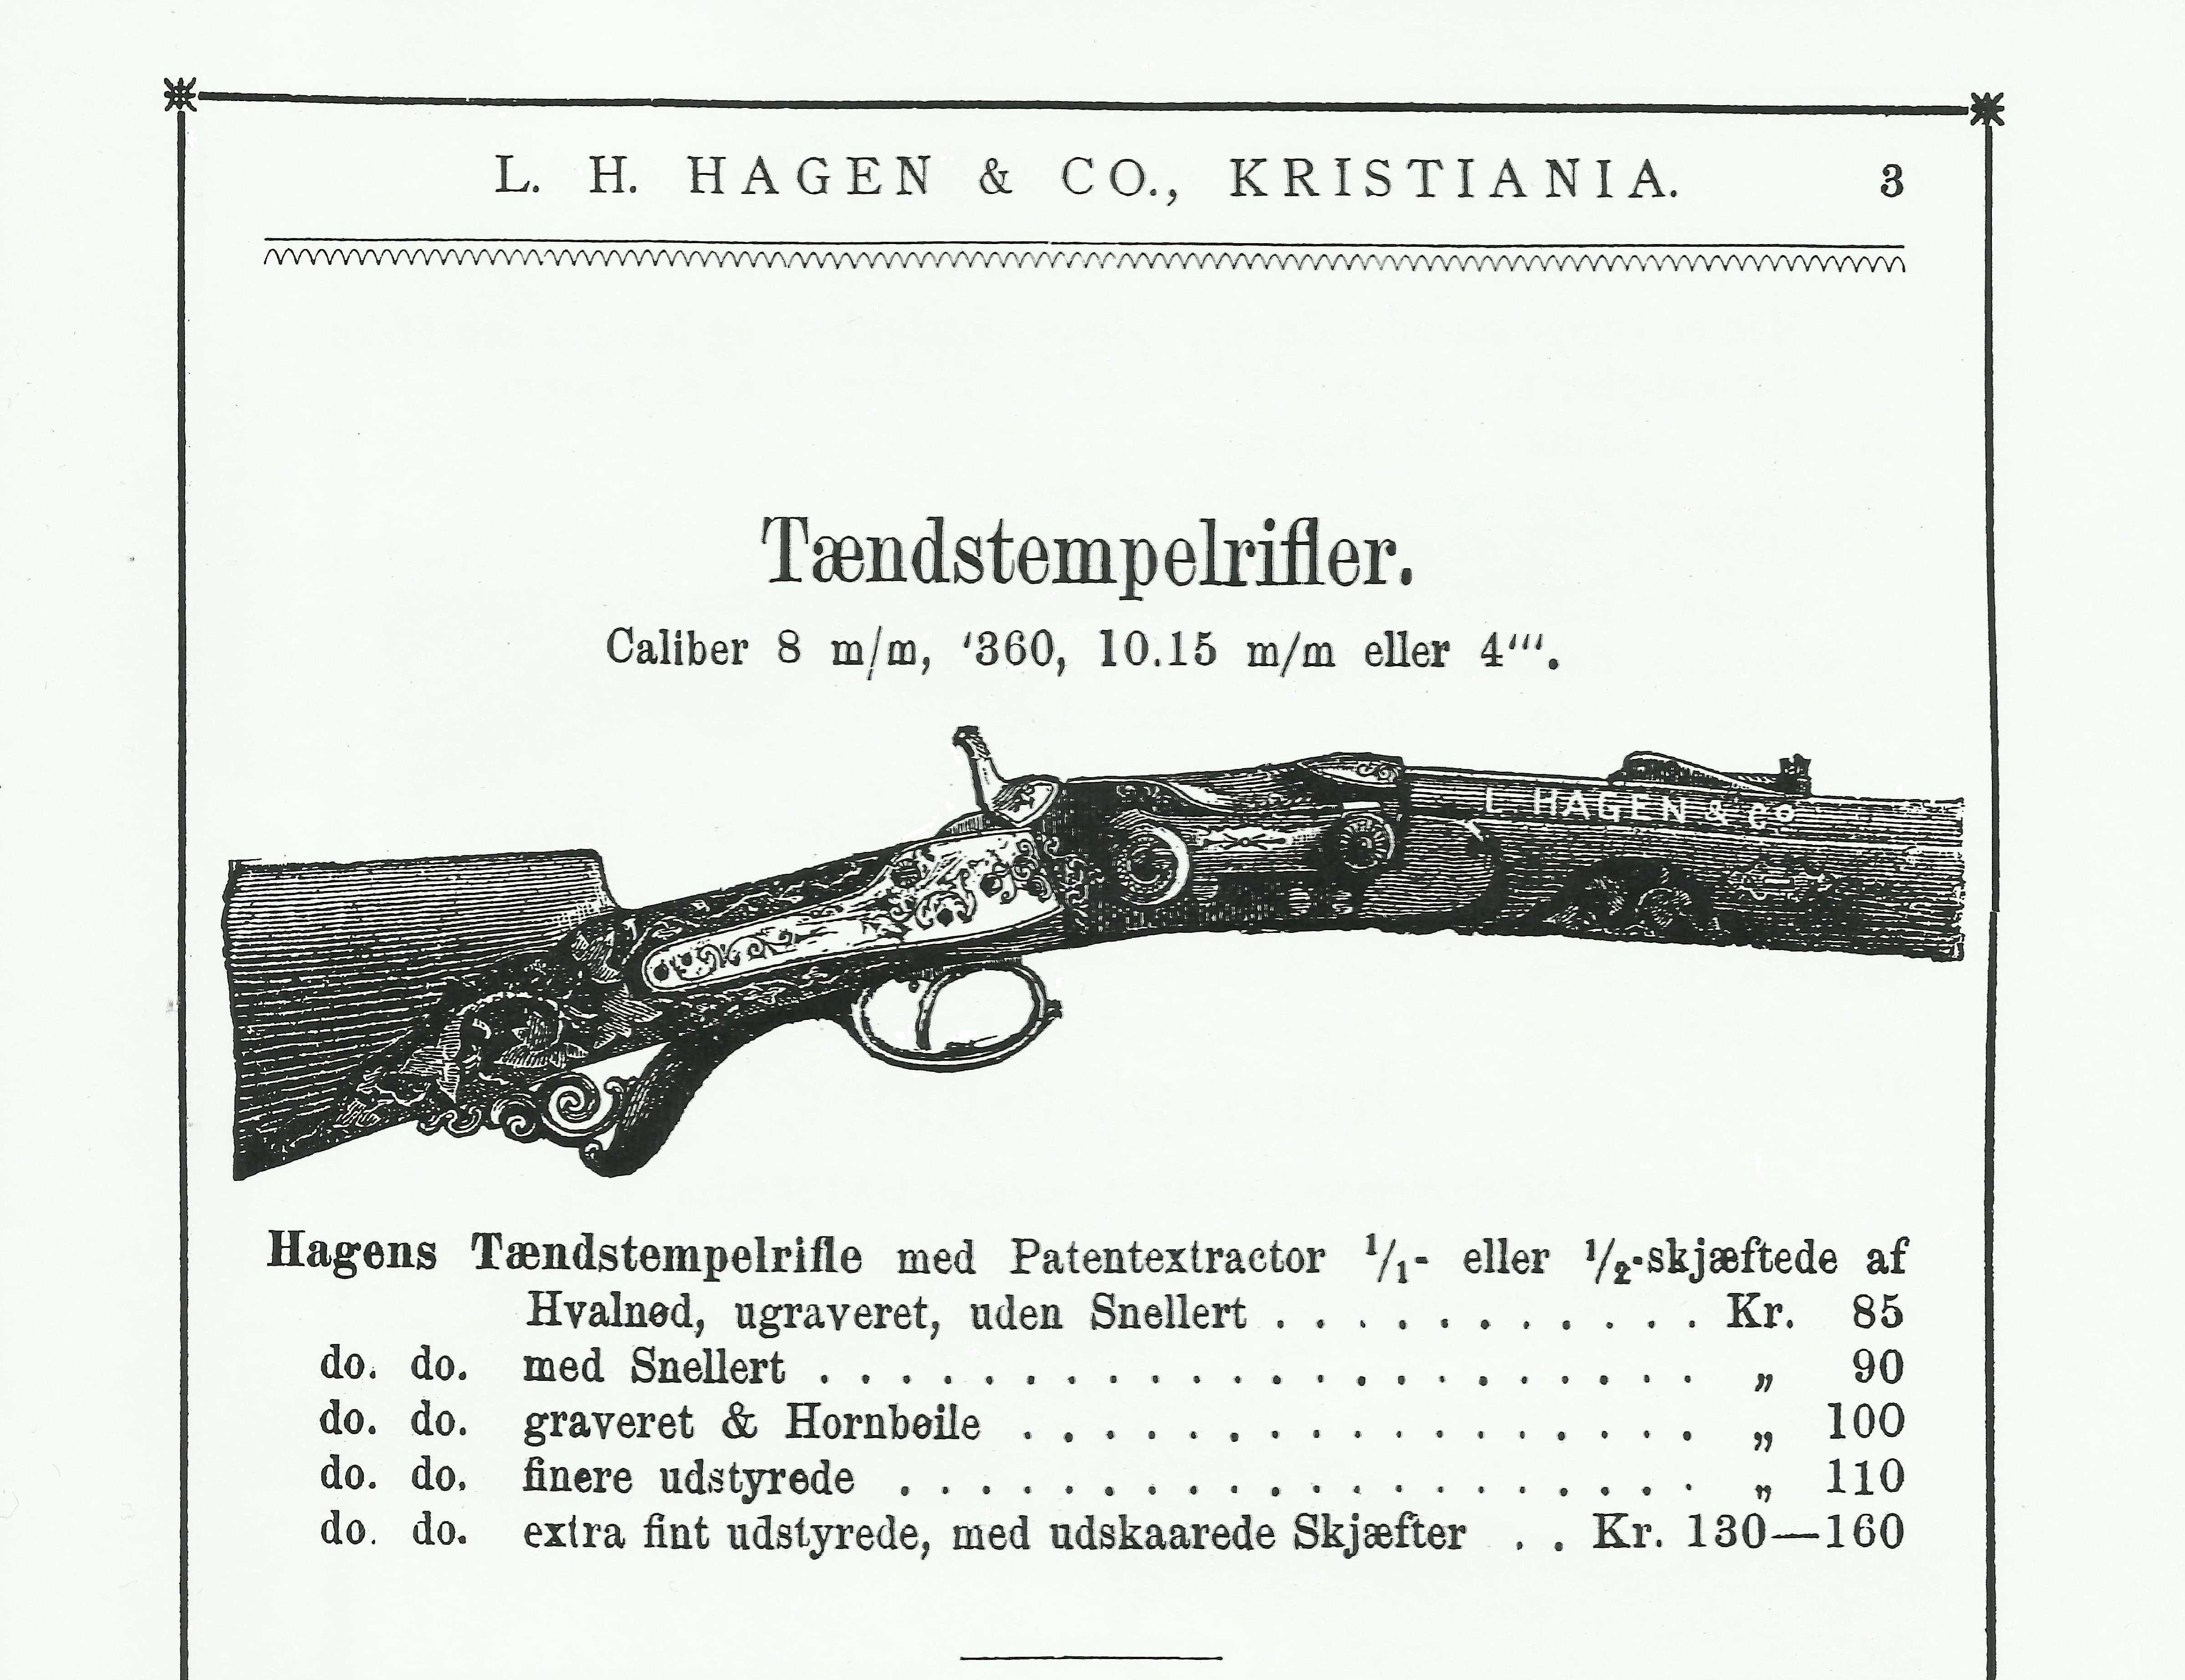 ./guns/hagen/rifle/bilder/Katalog-Hagen-189x-Side-3.jpg